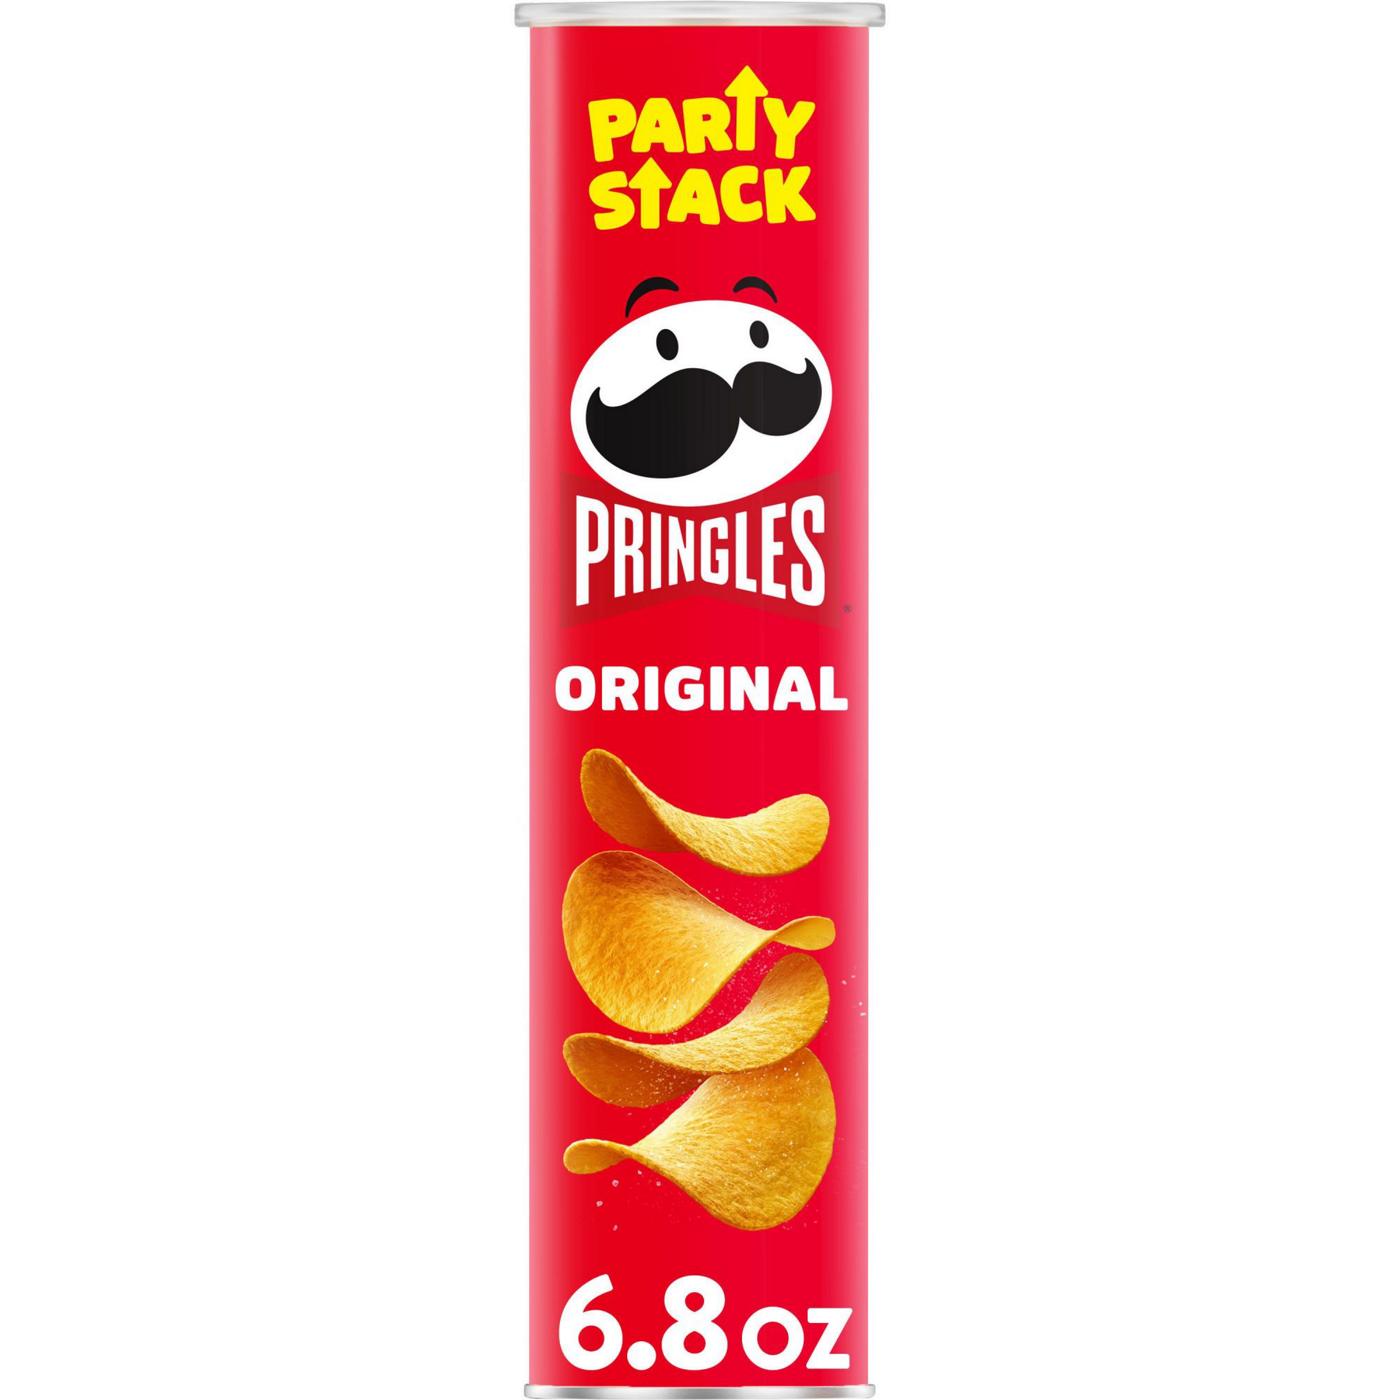 Pringles Original Potato Crisps Chips - Shop Chips at H-E-B